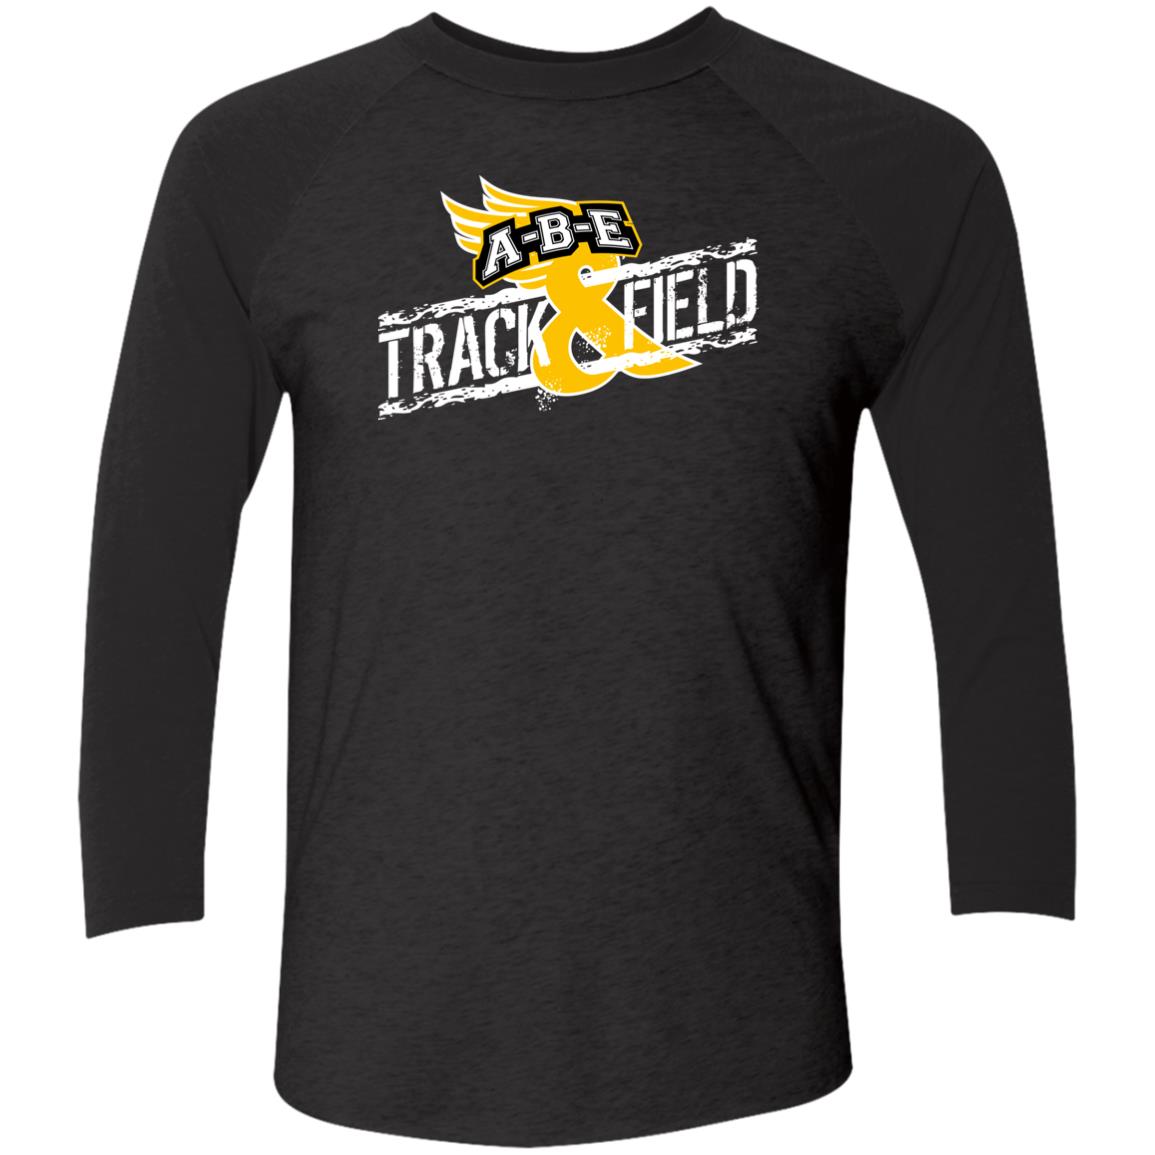 A-B-E Track & Field - Tri-Blend 3/4 Sleeve Raglan T-Shirt